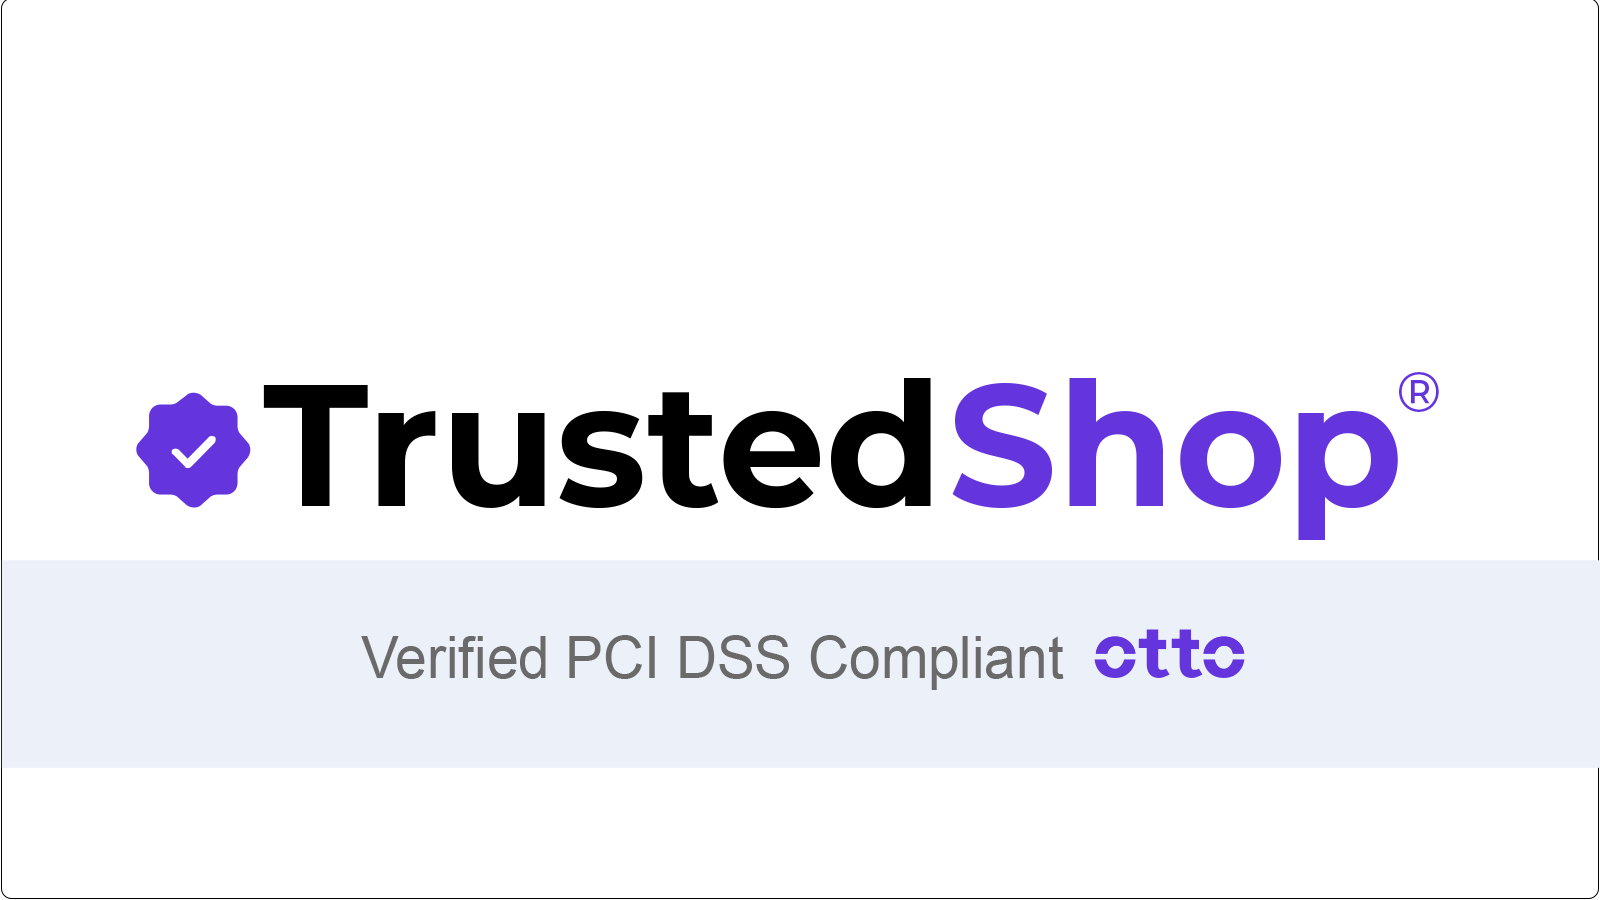 La insignia verificada de TrustedShop PCI da confianza a los clientes